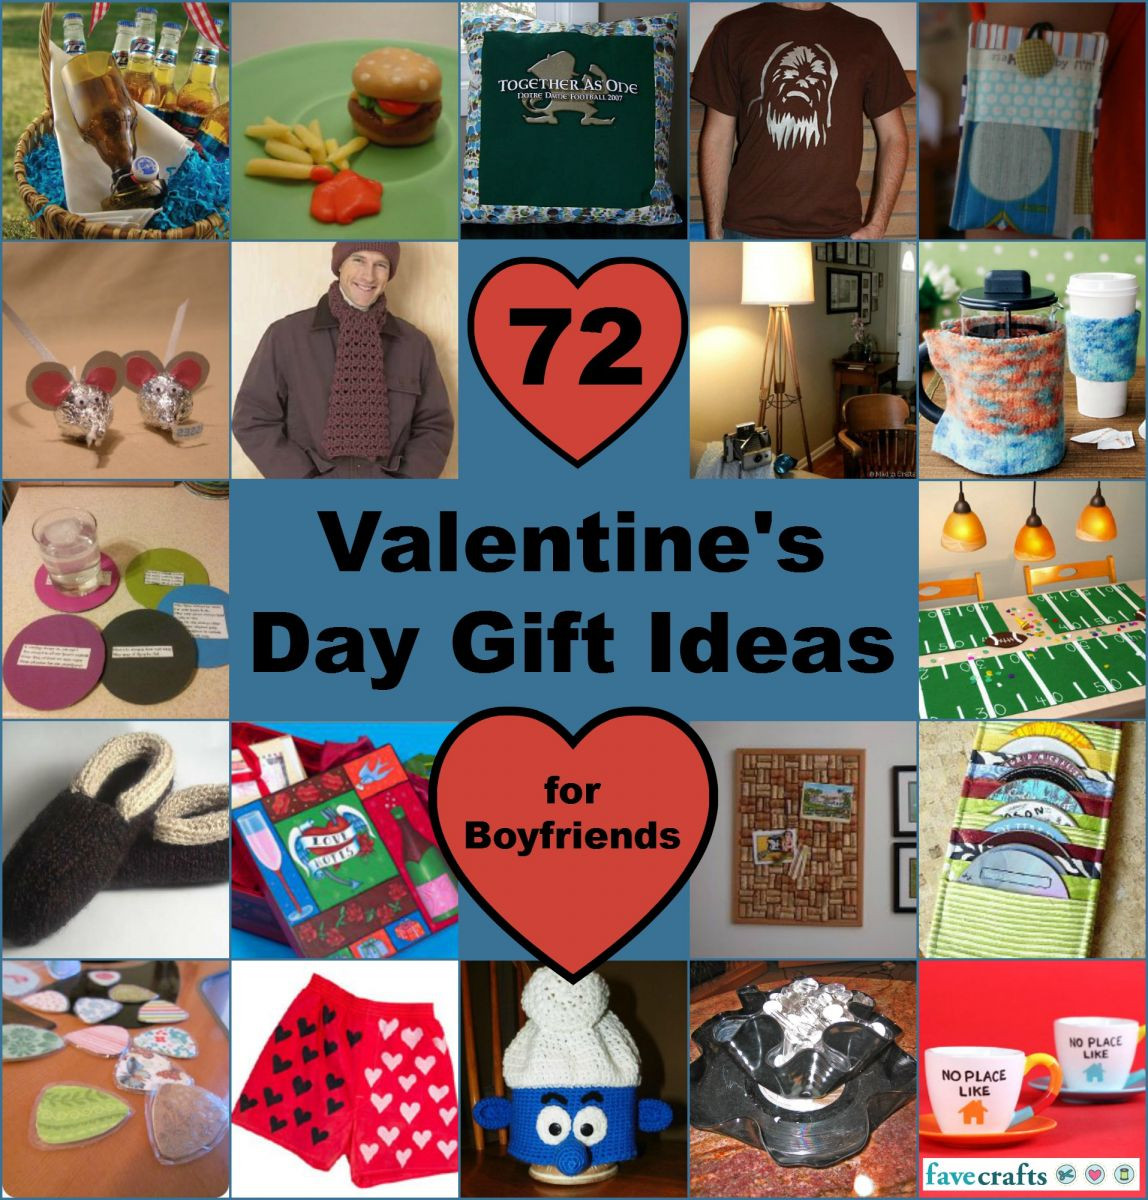 Valentines Day Ideas Gift Boyfriend
 Top 15 Favorite Valentine s Arts and Crafts Videos and